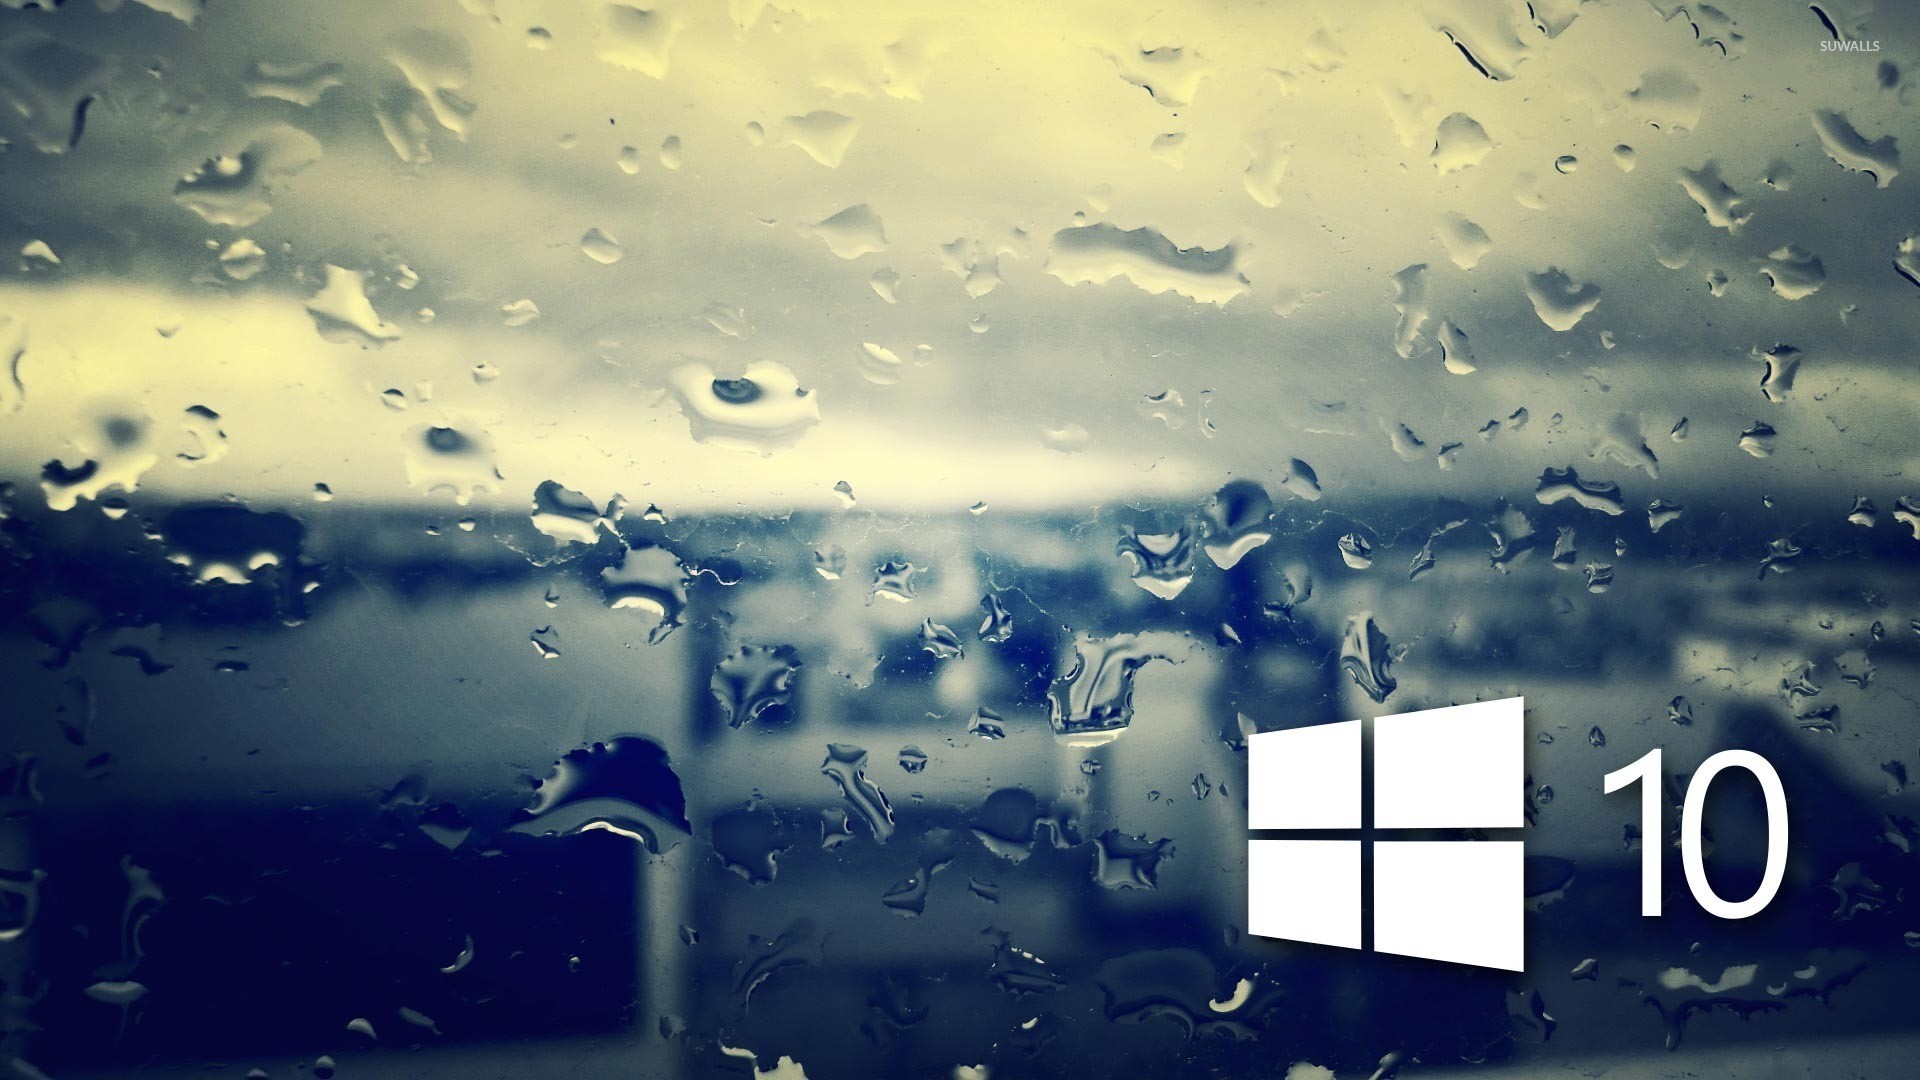 1920x1080  Windows 10 on the rainy window [4] wallpaper  jpg